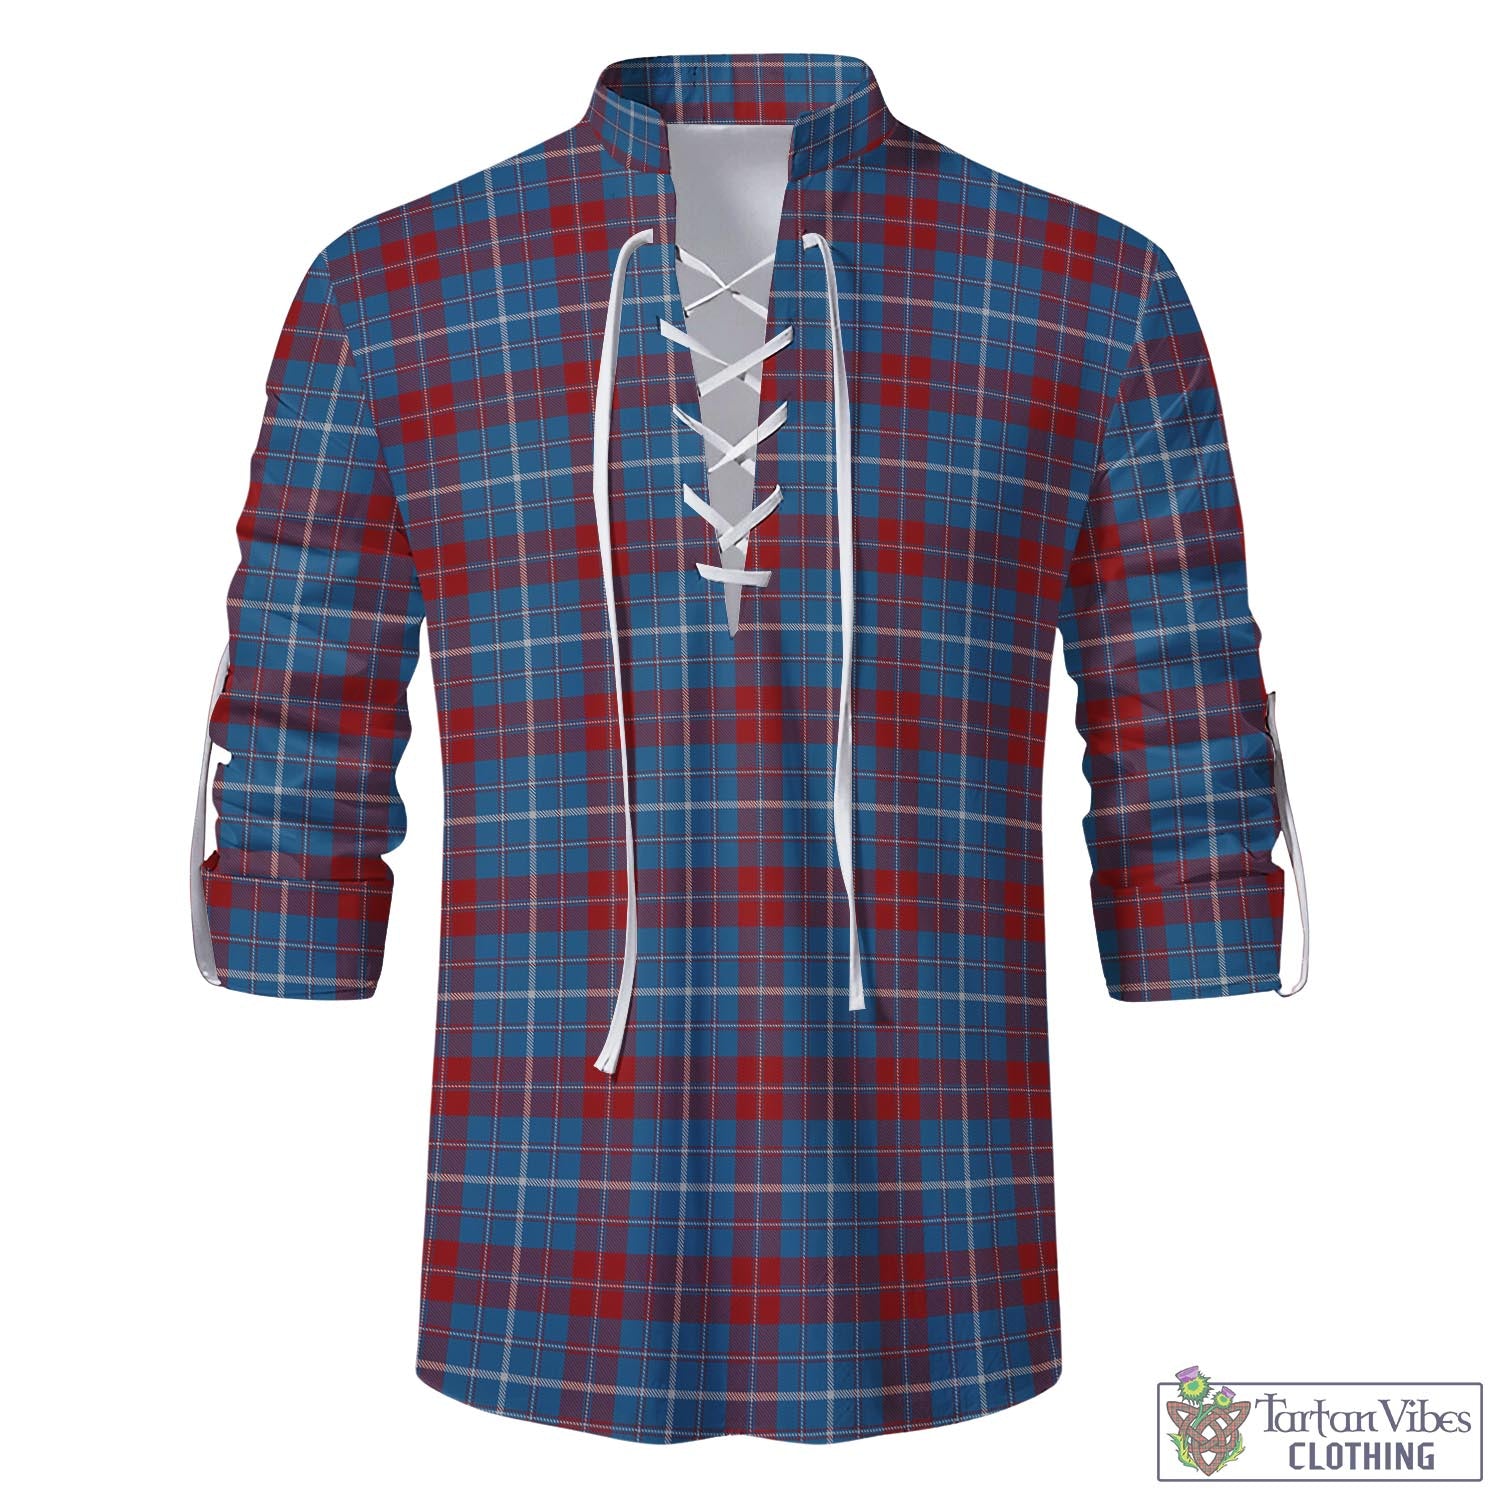 Tartan Vibes Clothing Frame Tartan Men's Scottish Traditional Jacobite Ghillie Kilt Shirt